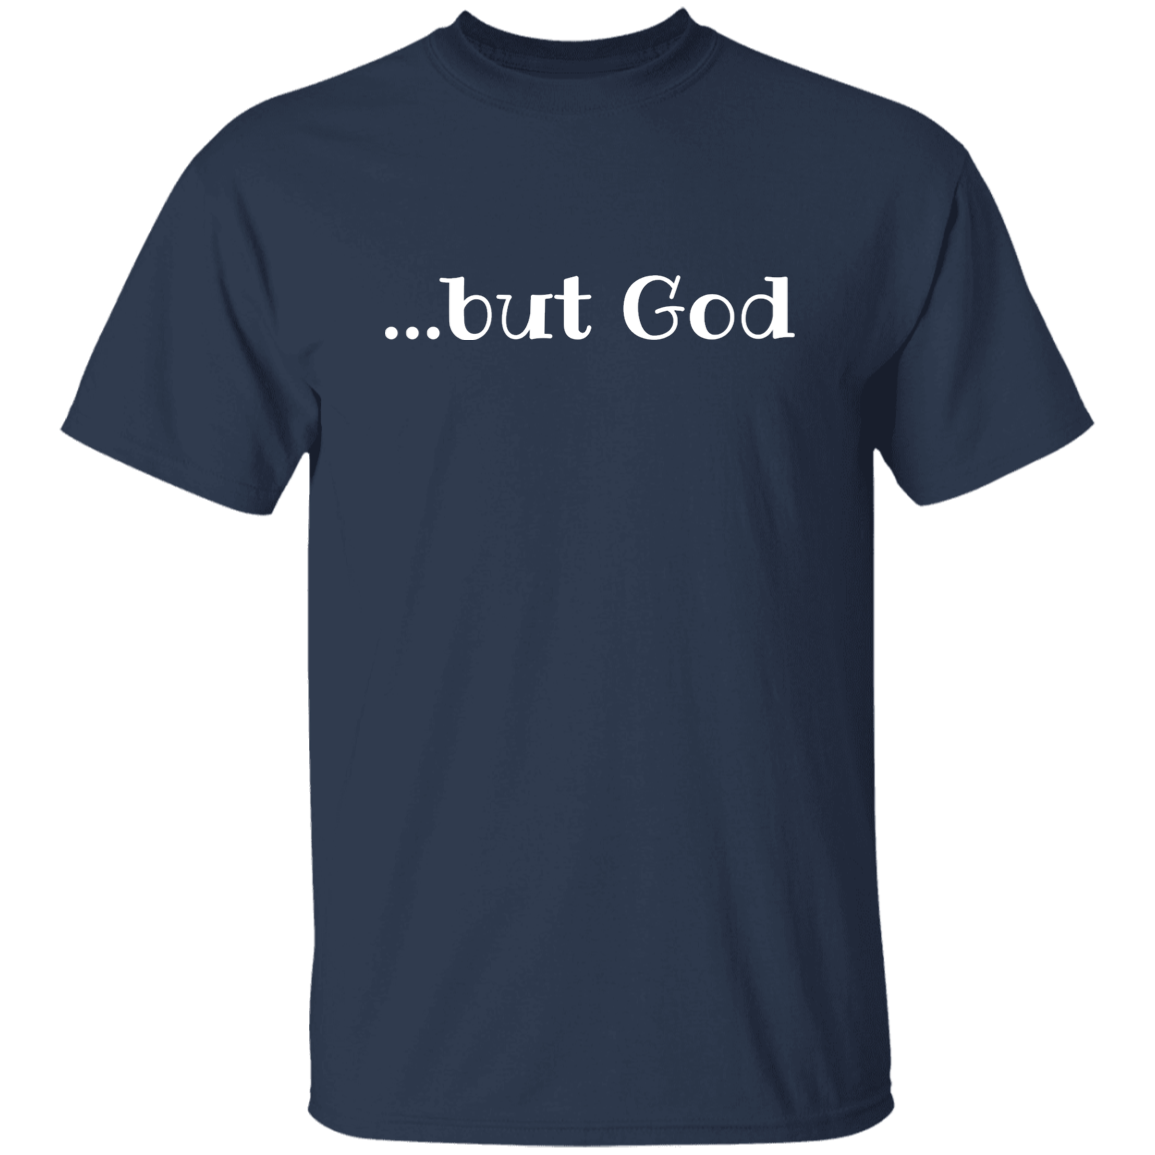 But God 5.3 oz. T-Shirt